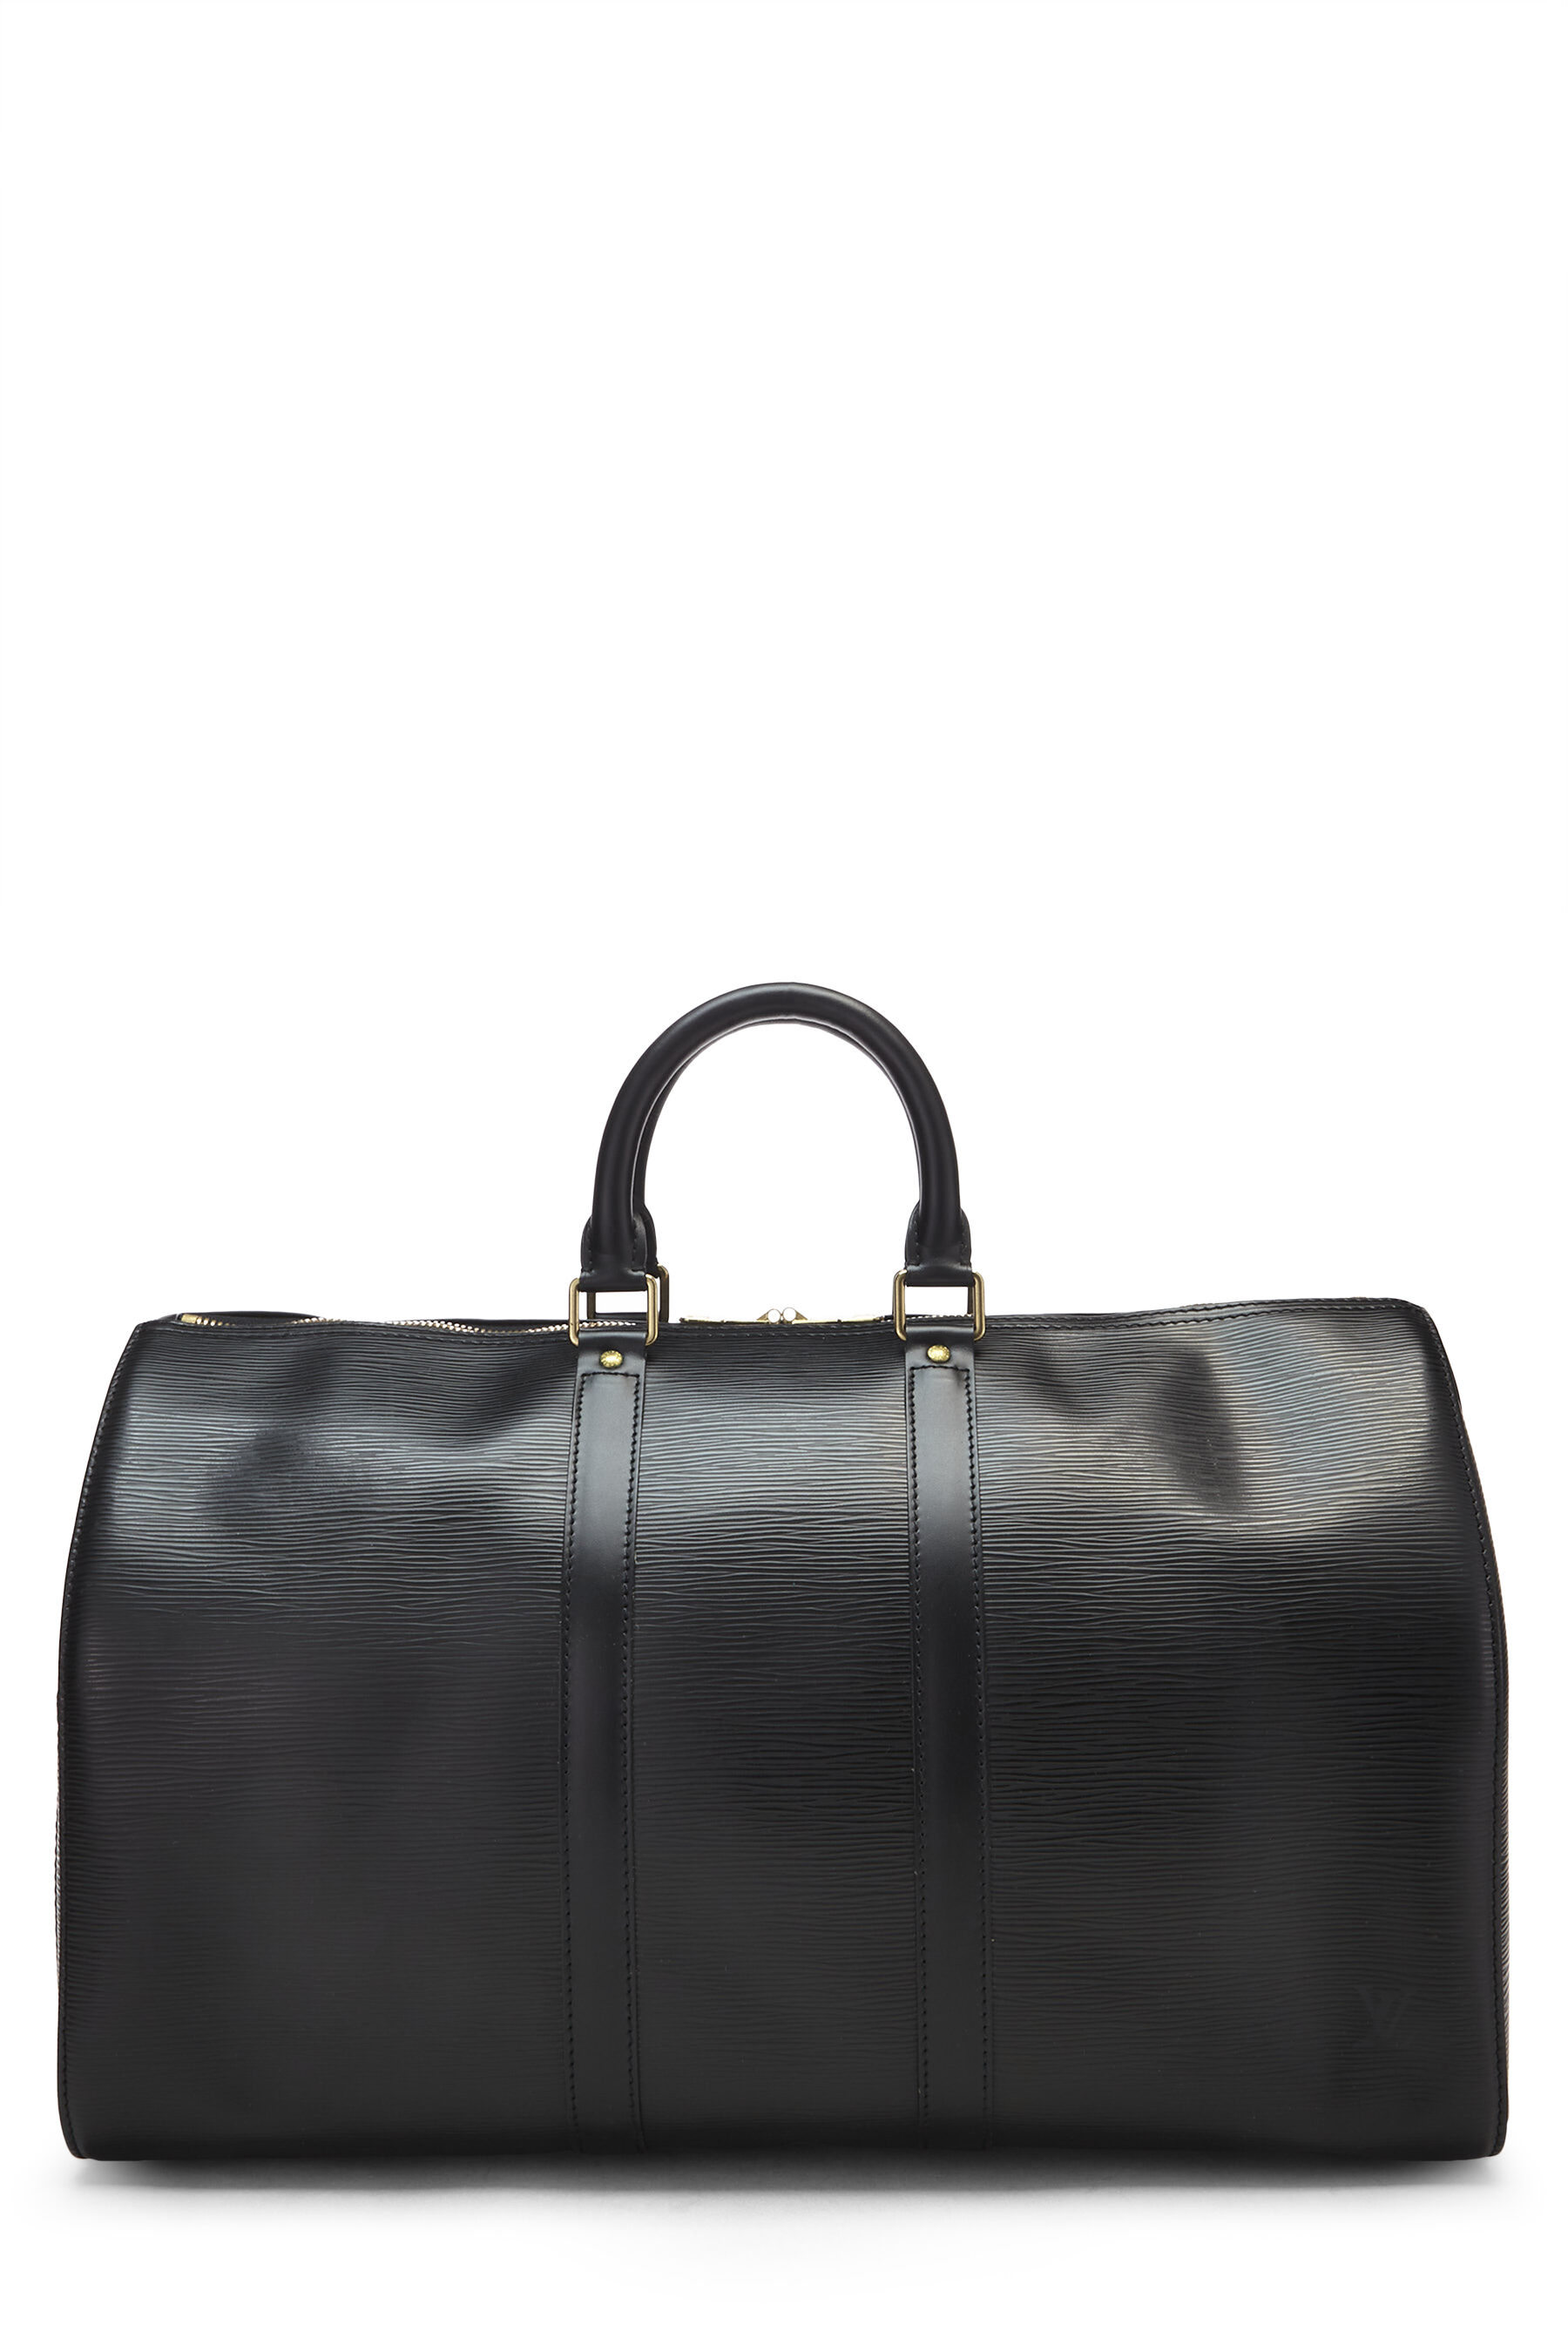 Louis Vuitton Black Epi Keepall 50 Travel Boston Bag Louis Vuitton